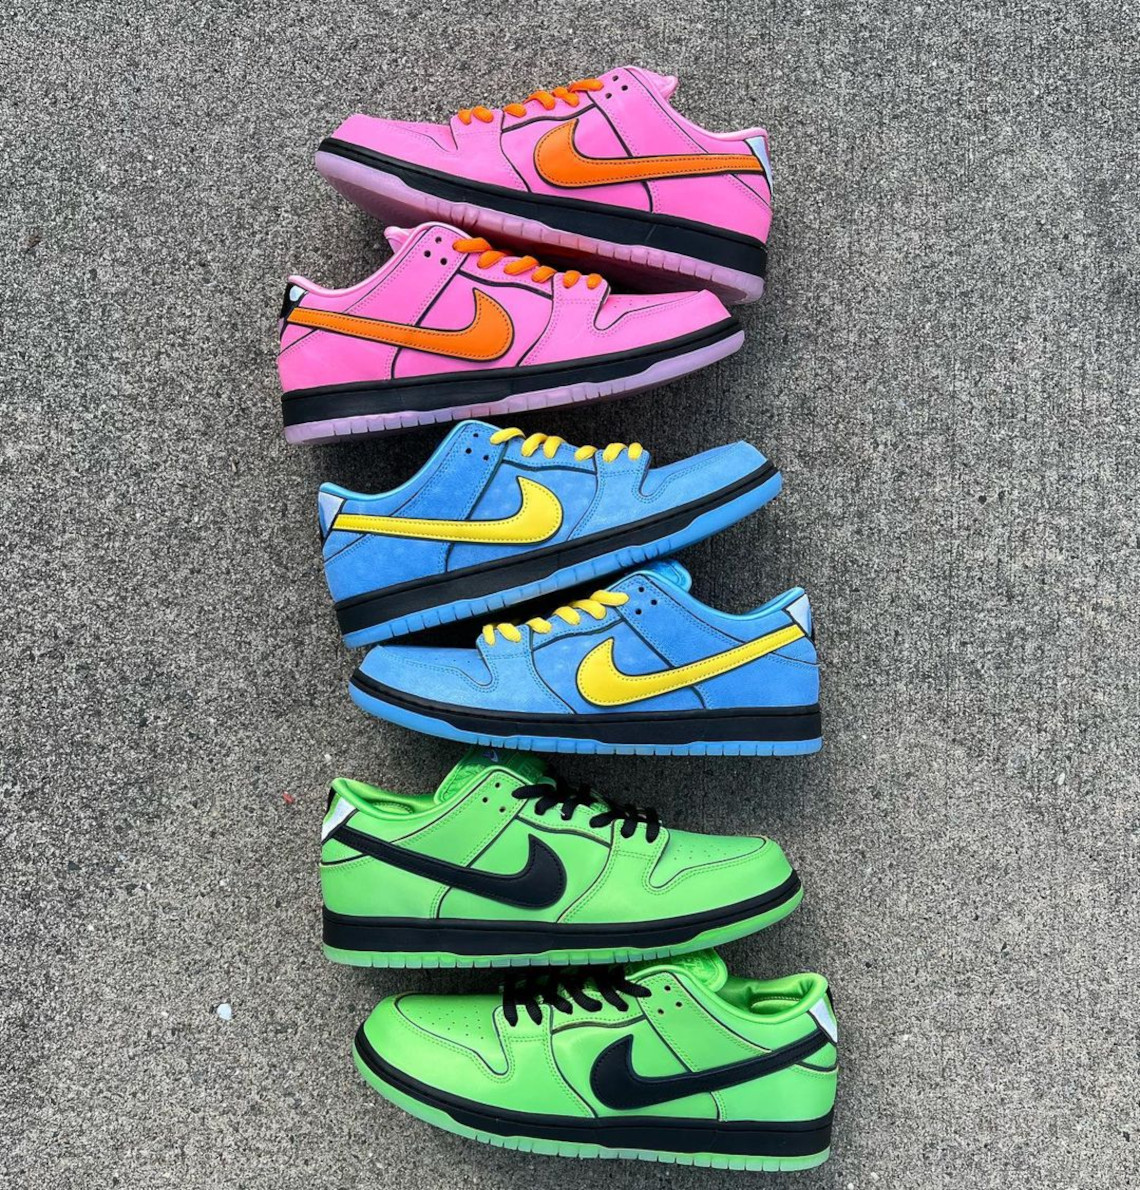 Where to Buy: Powerpuff Girls x Nike SB Dunks | Sneaker News